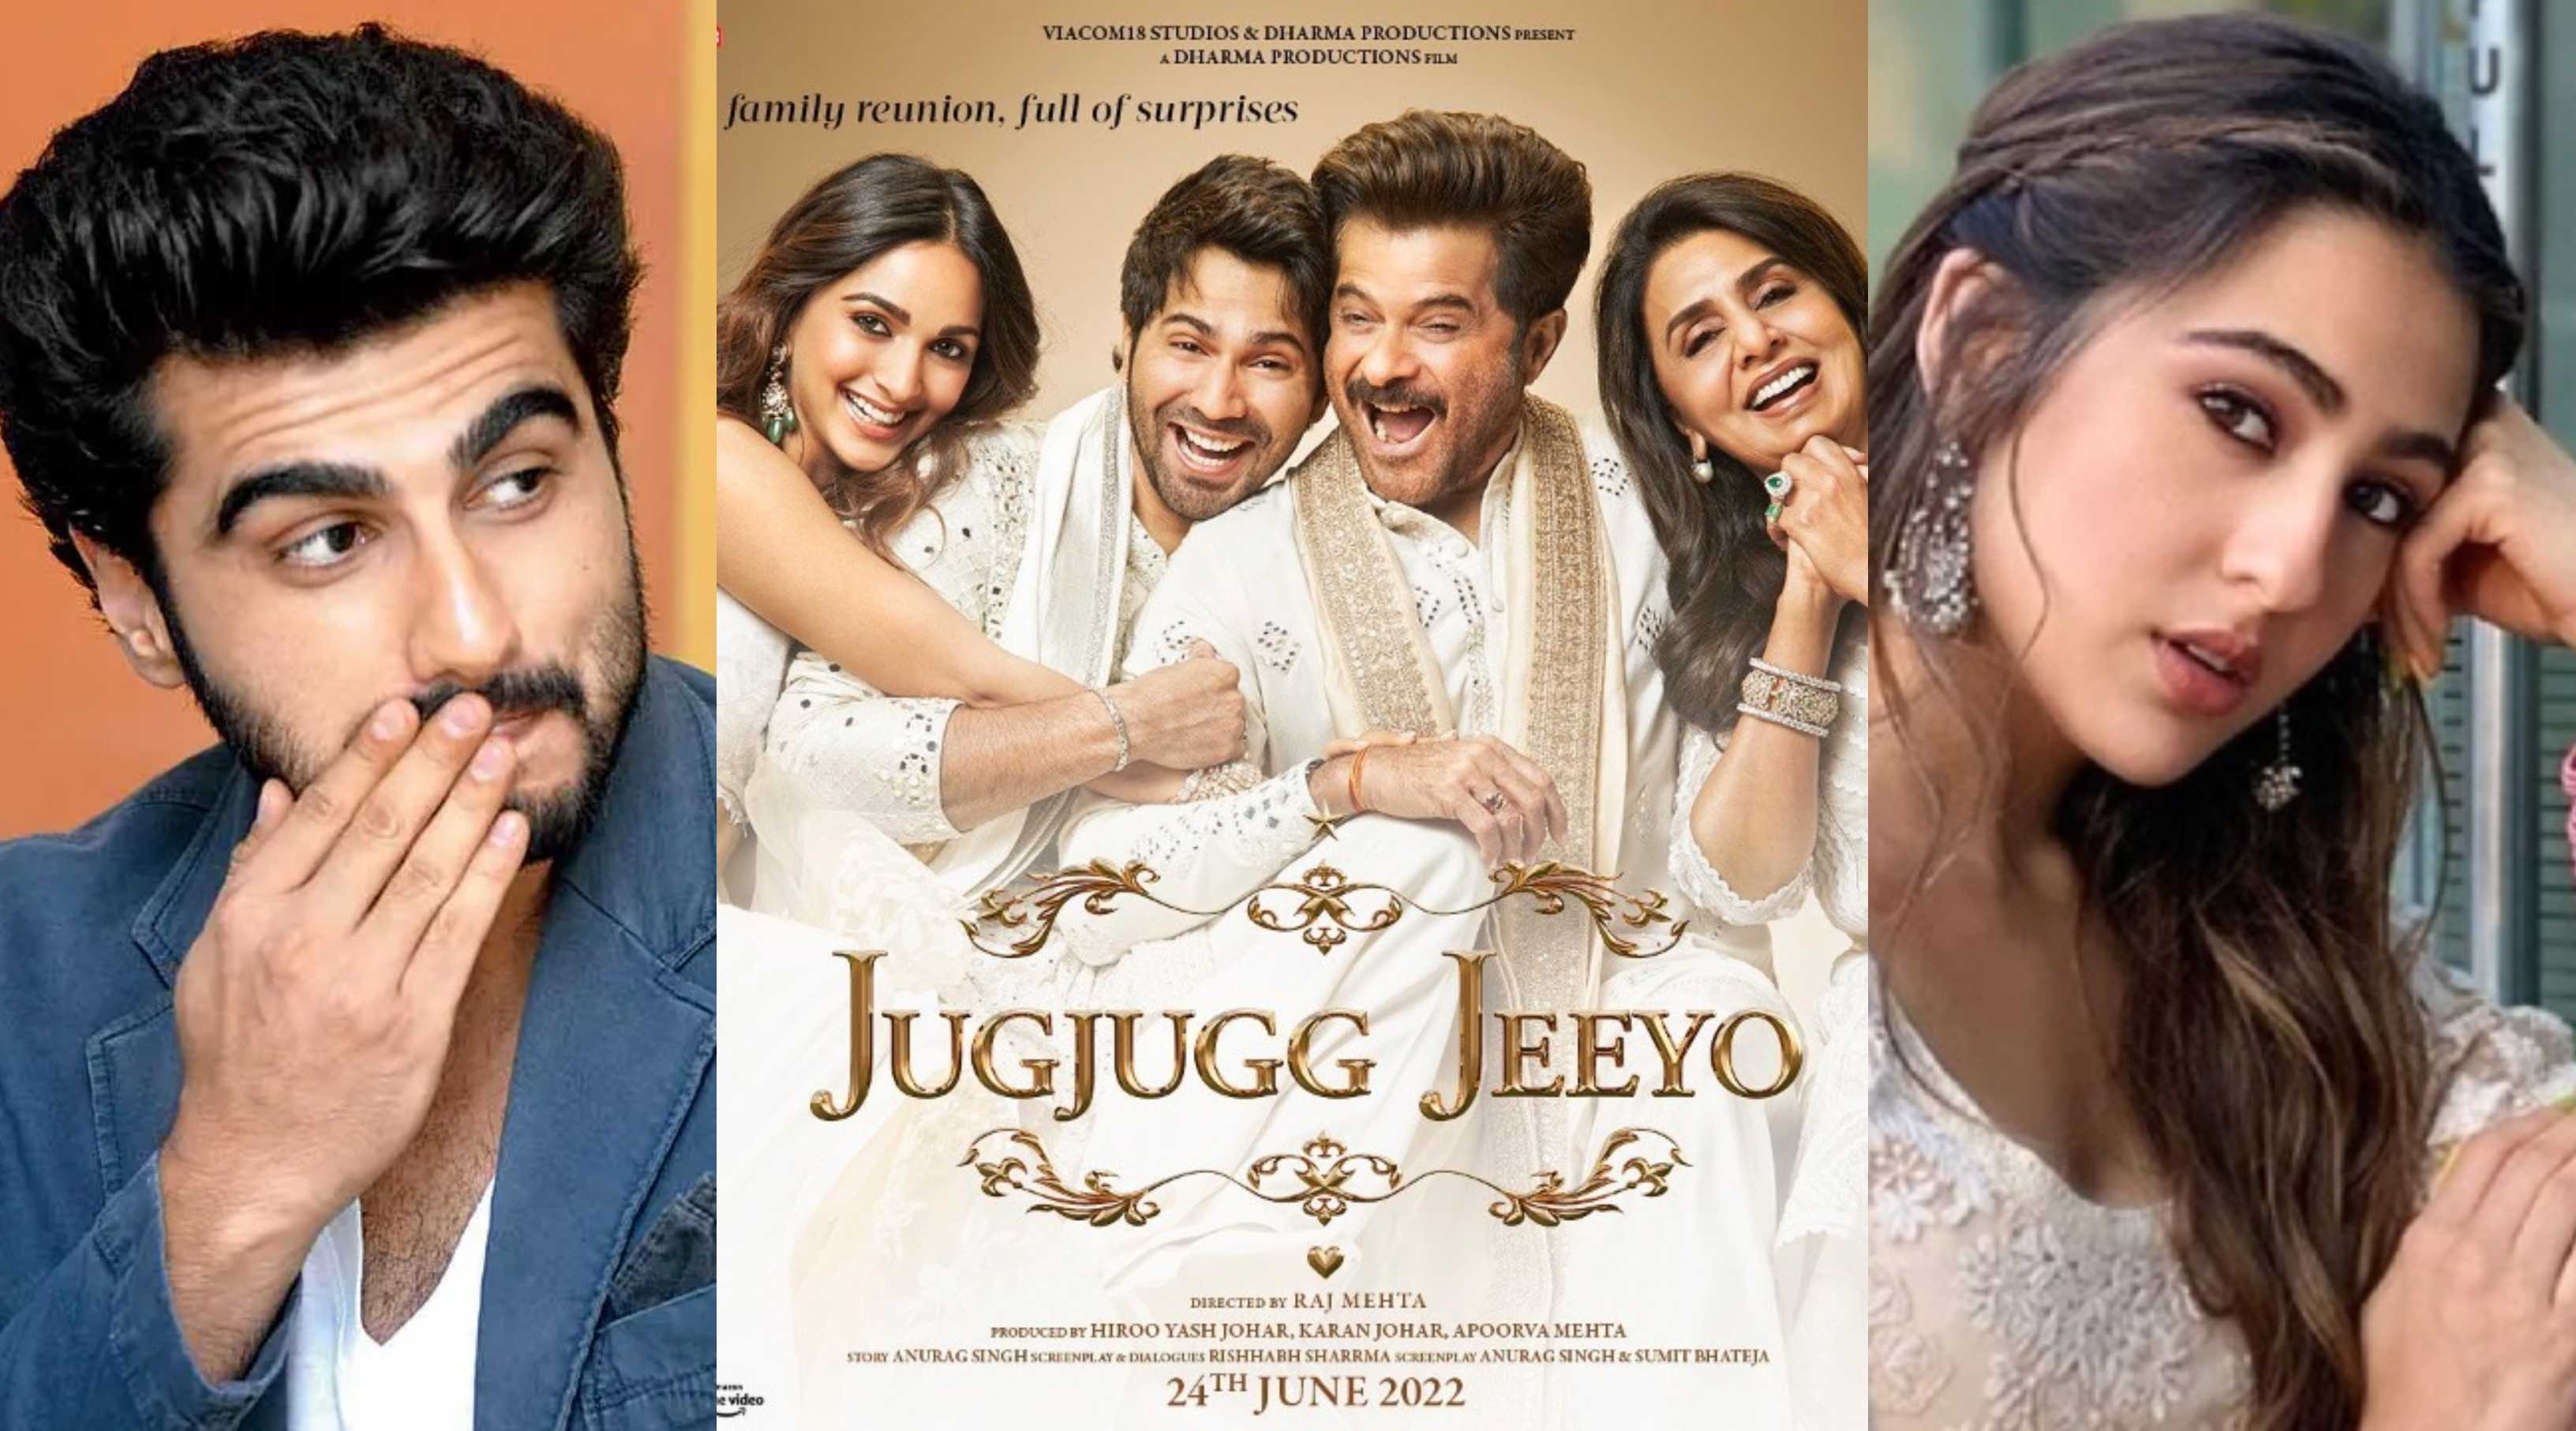 Jugjugg Jeeyo: Sara Ali Khan, Vicky Kaushal review Varun-Kiara’s film; Arjun Kapoor calls it ‘true blue family entertainer’